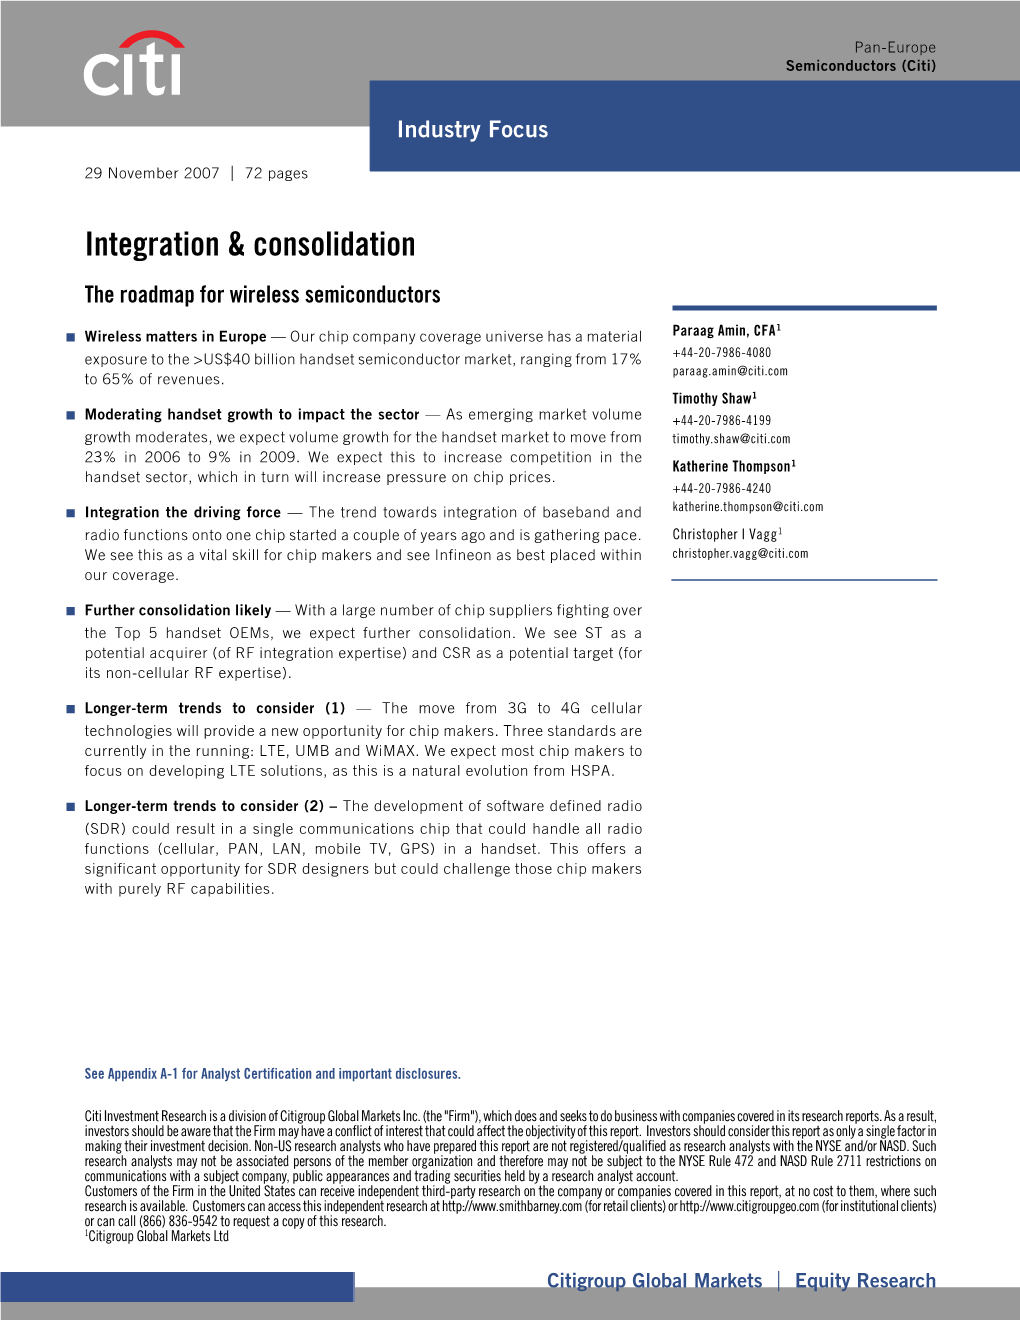 Integration & Consolidation